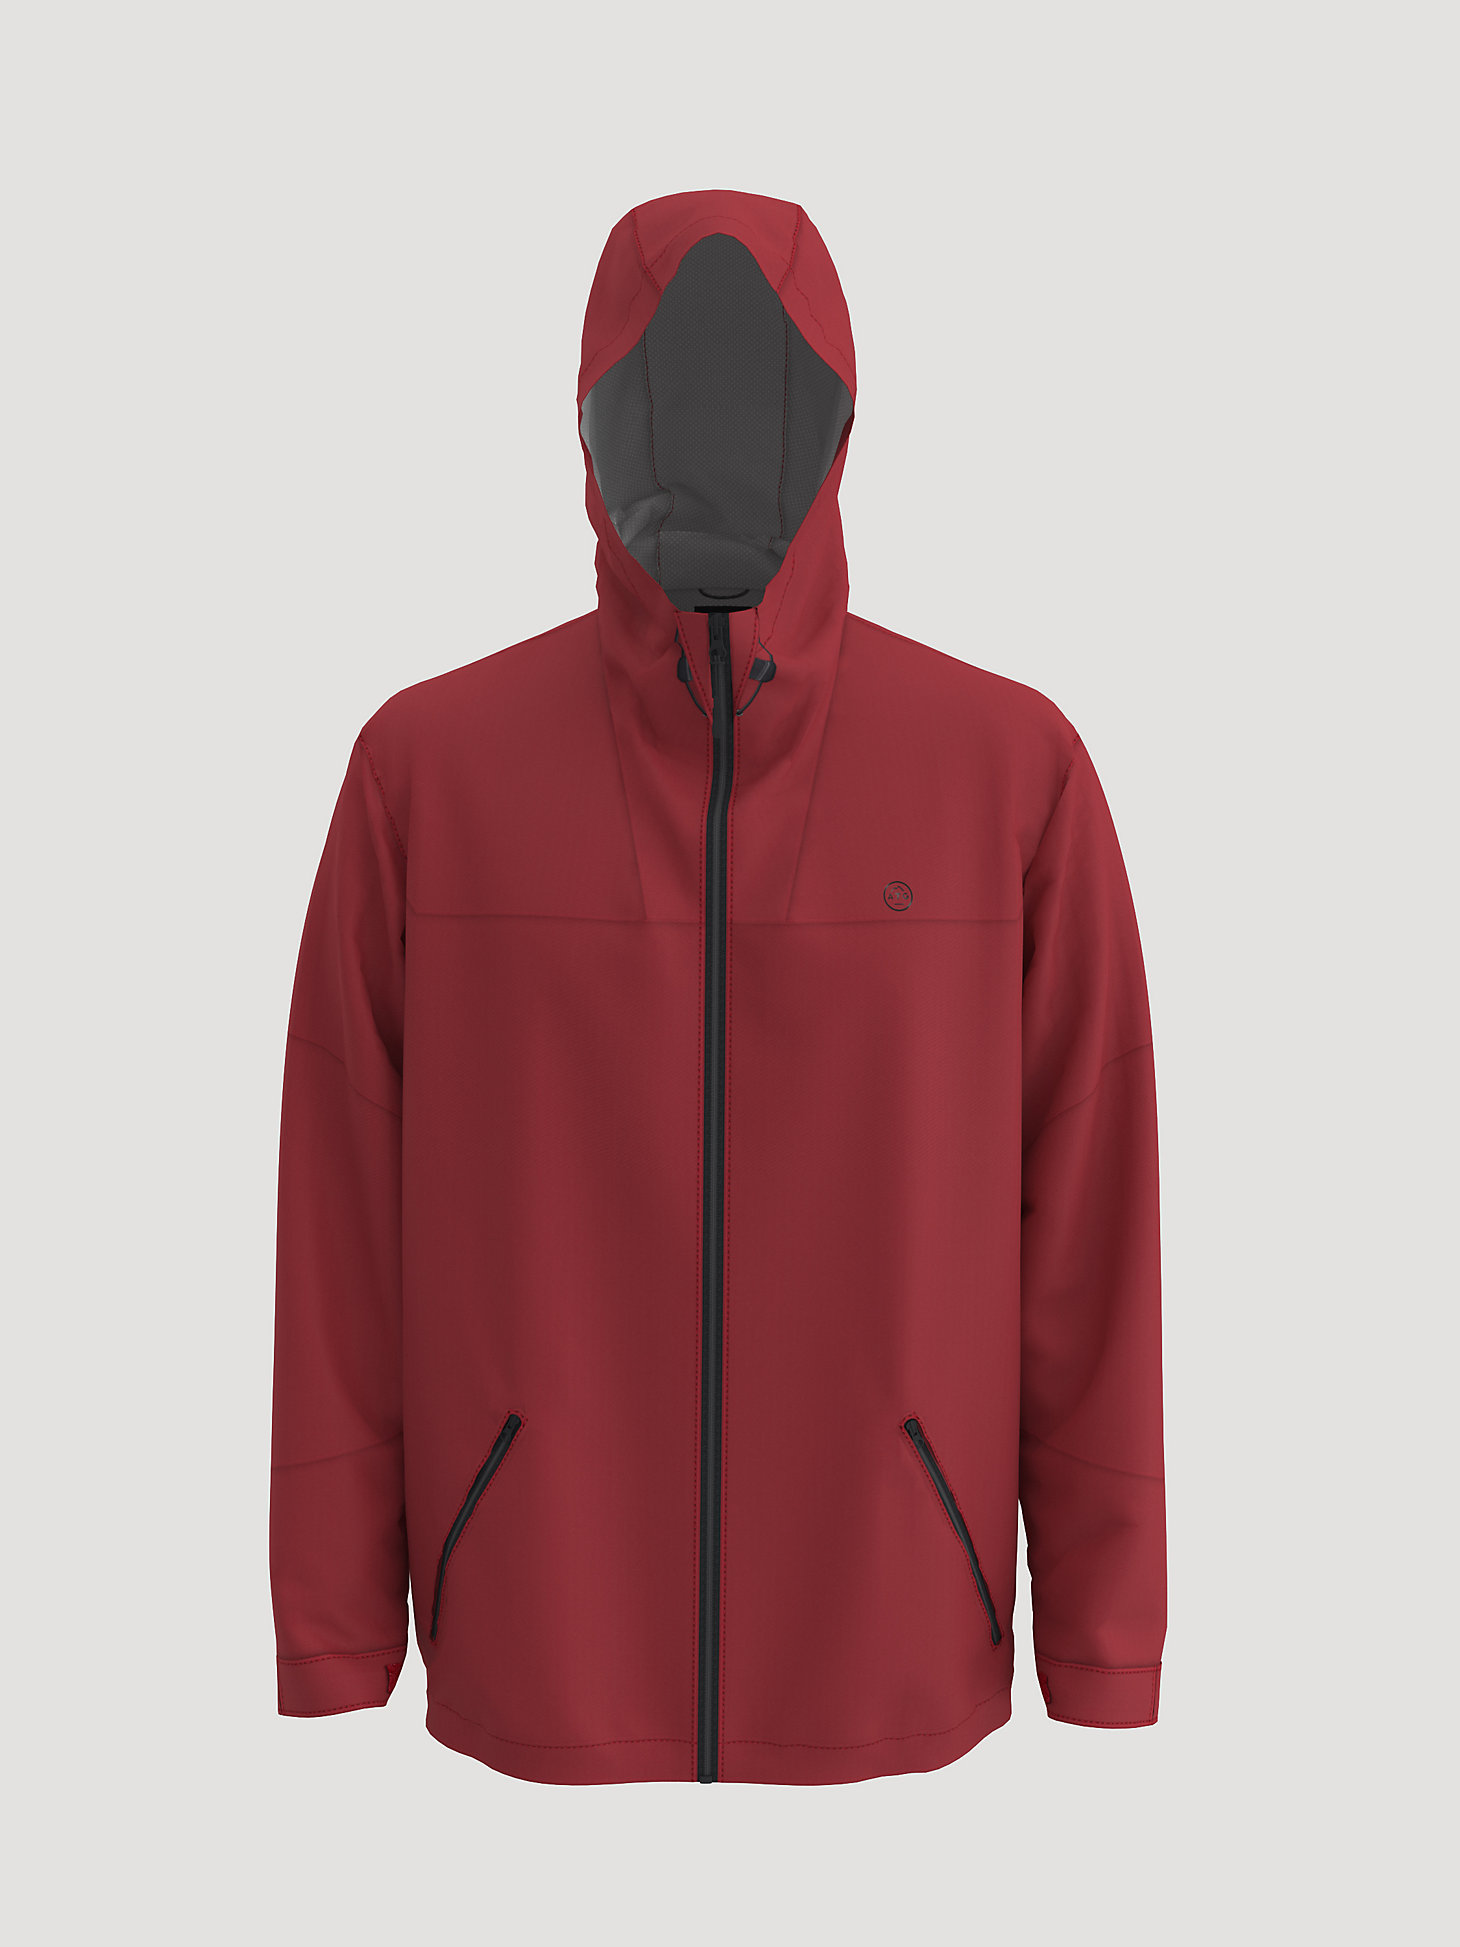 ATG by Wrangler™ Men's Rain Jacket in Red alternative view 10